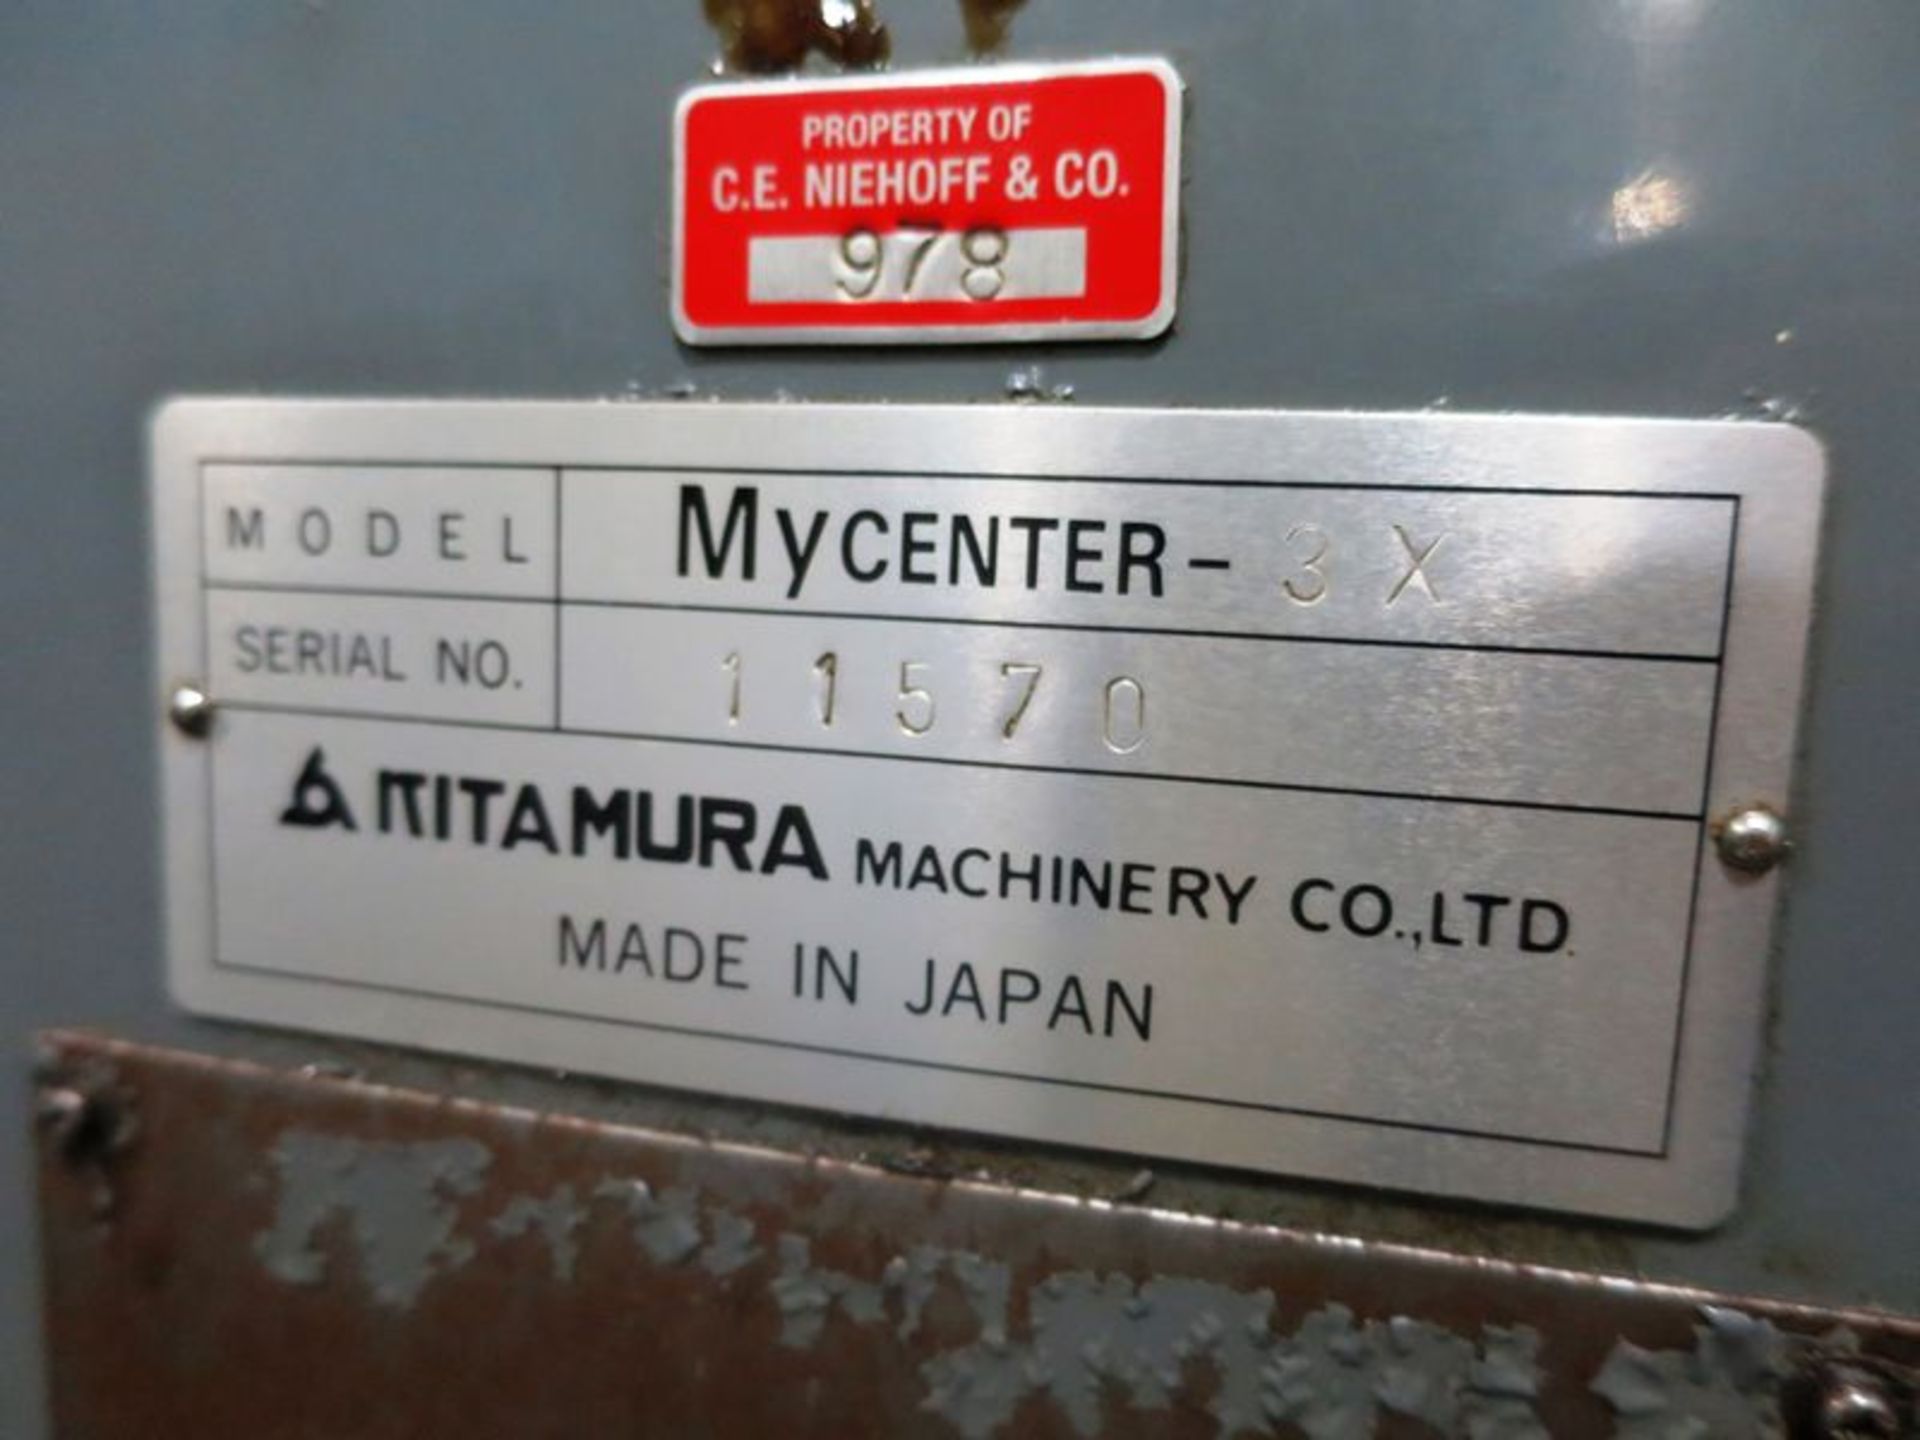 1996 Kitamura Mycenter 3X APC CNC Vertical Machining Center w/Pallet Changer, S/N 11570 - Image 8 of 8